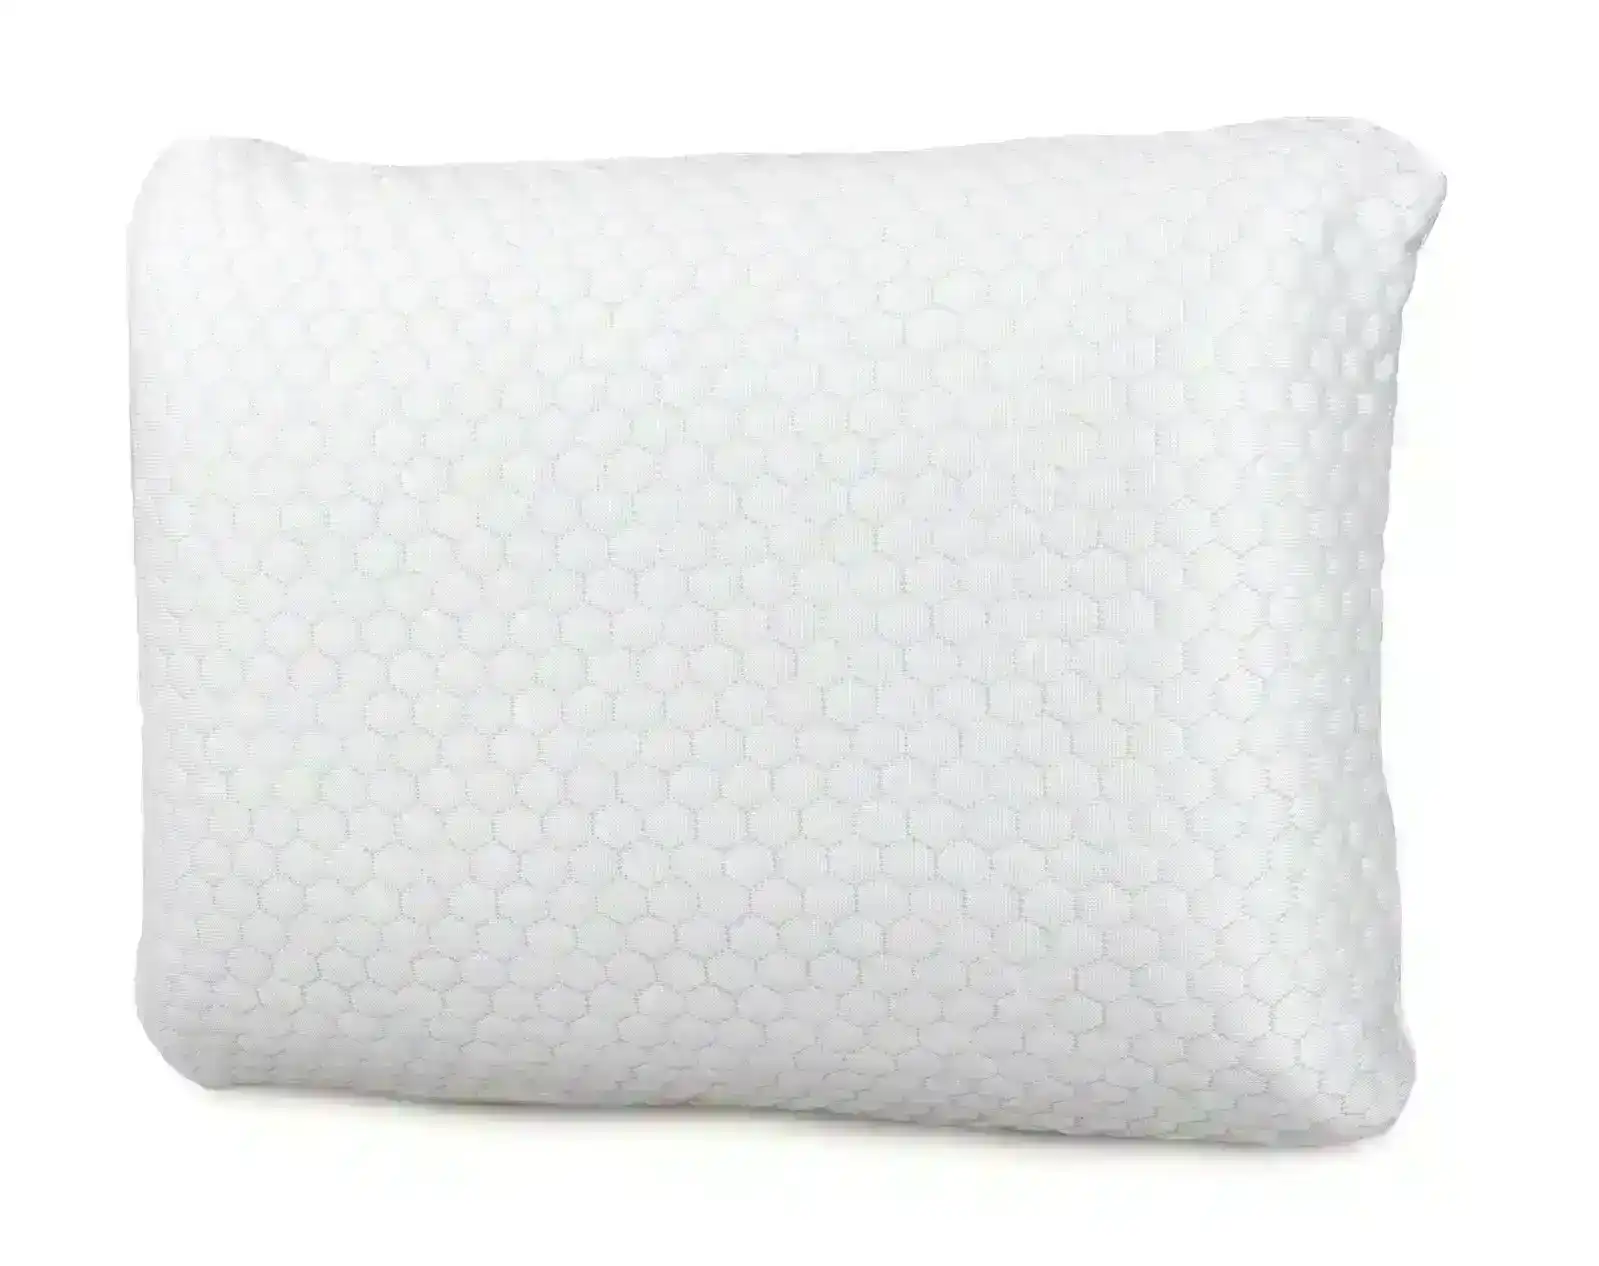 Ardor Standard Cooling 60x40cm Memory Foam Soft Pillow Bed Sleeping Cushion WHT